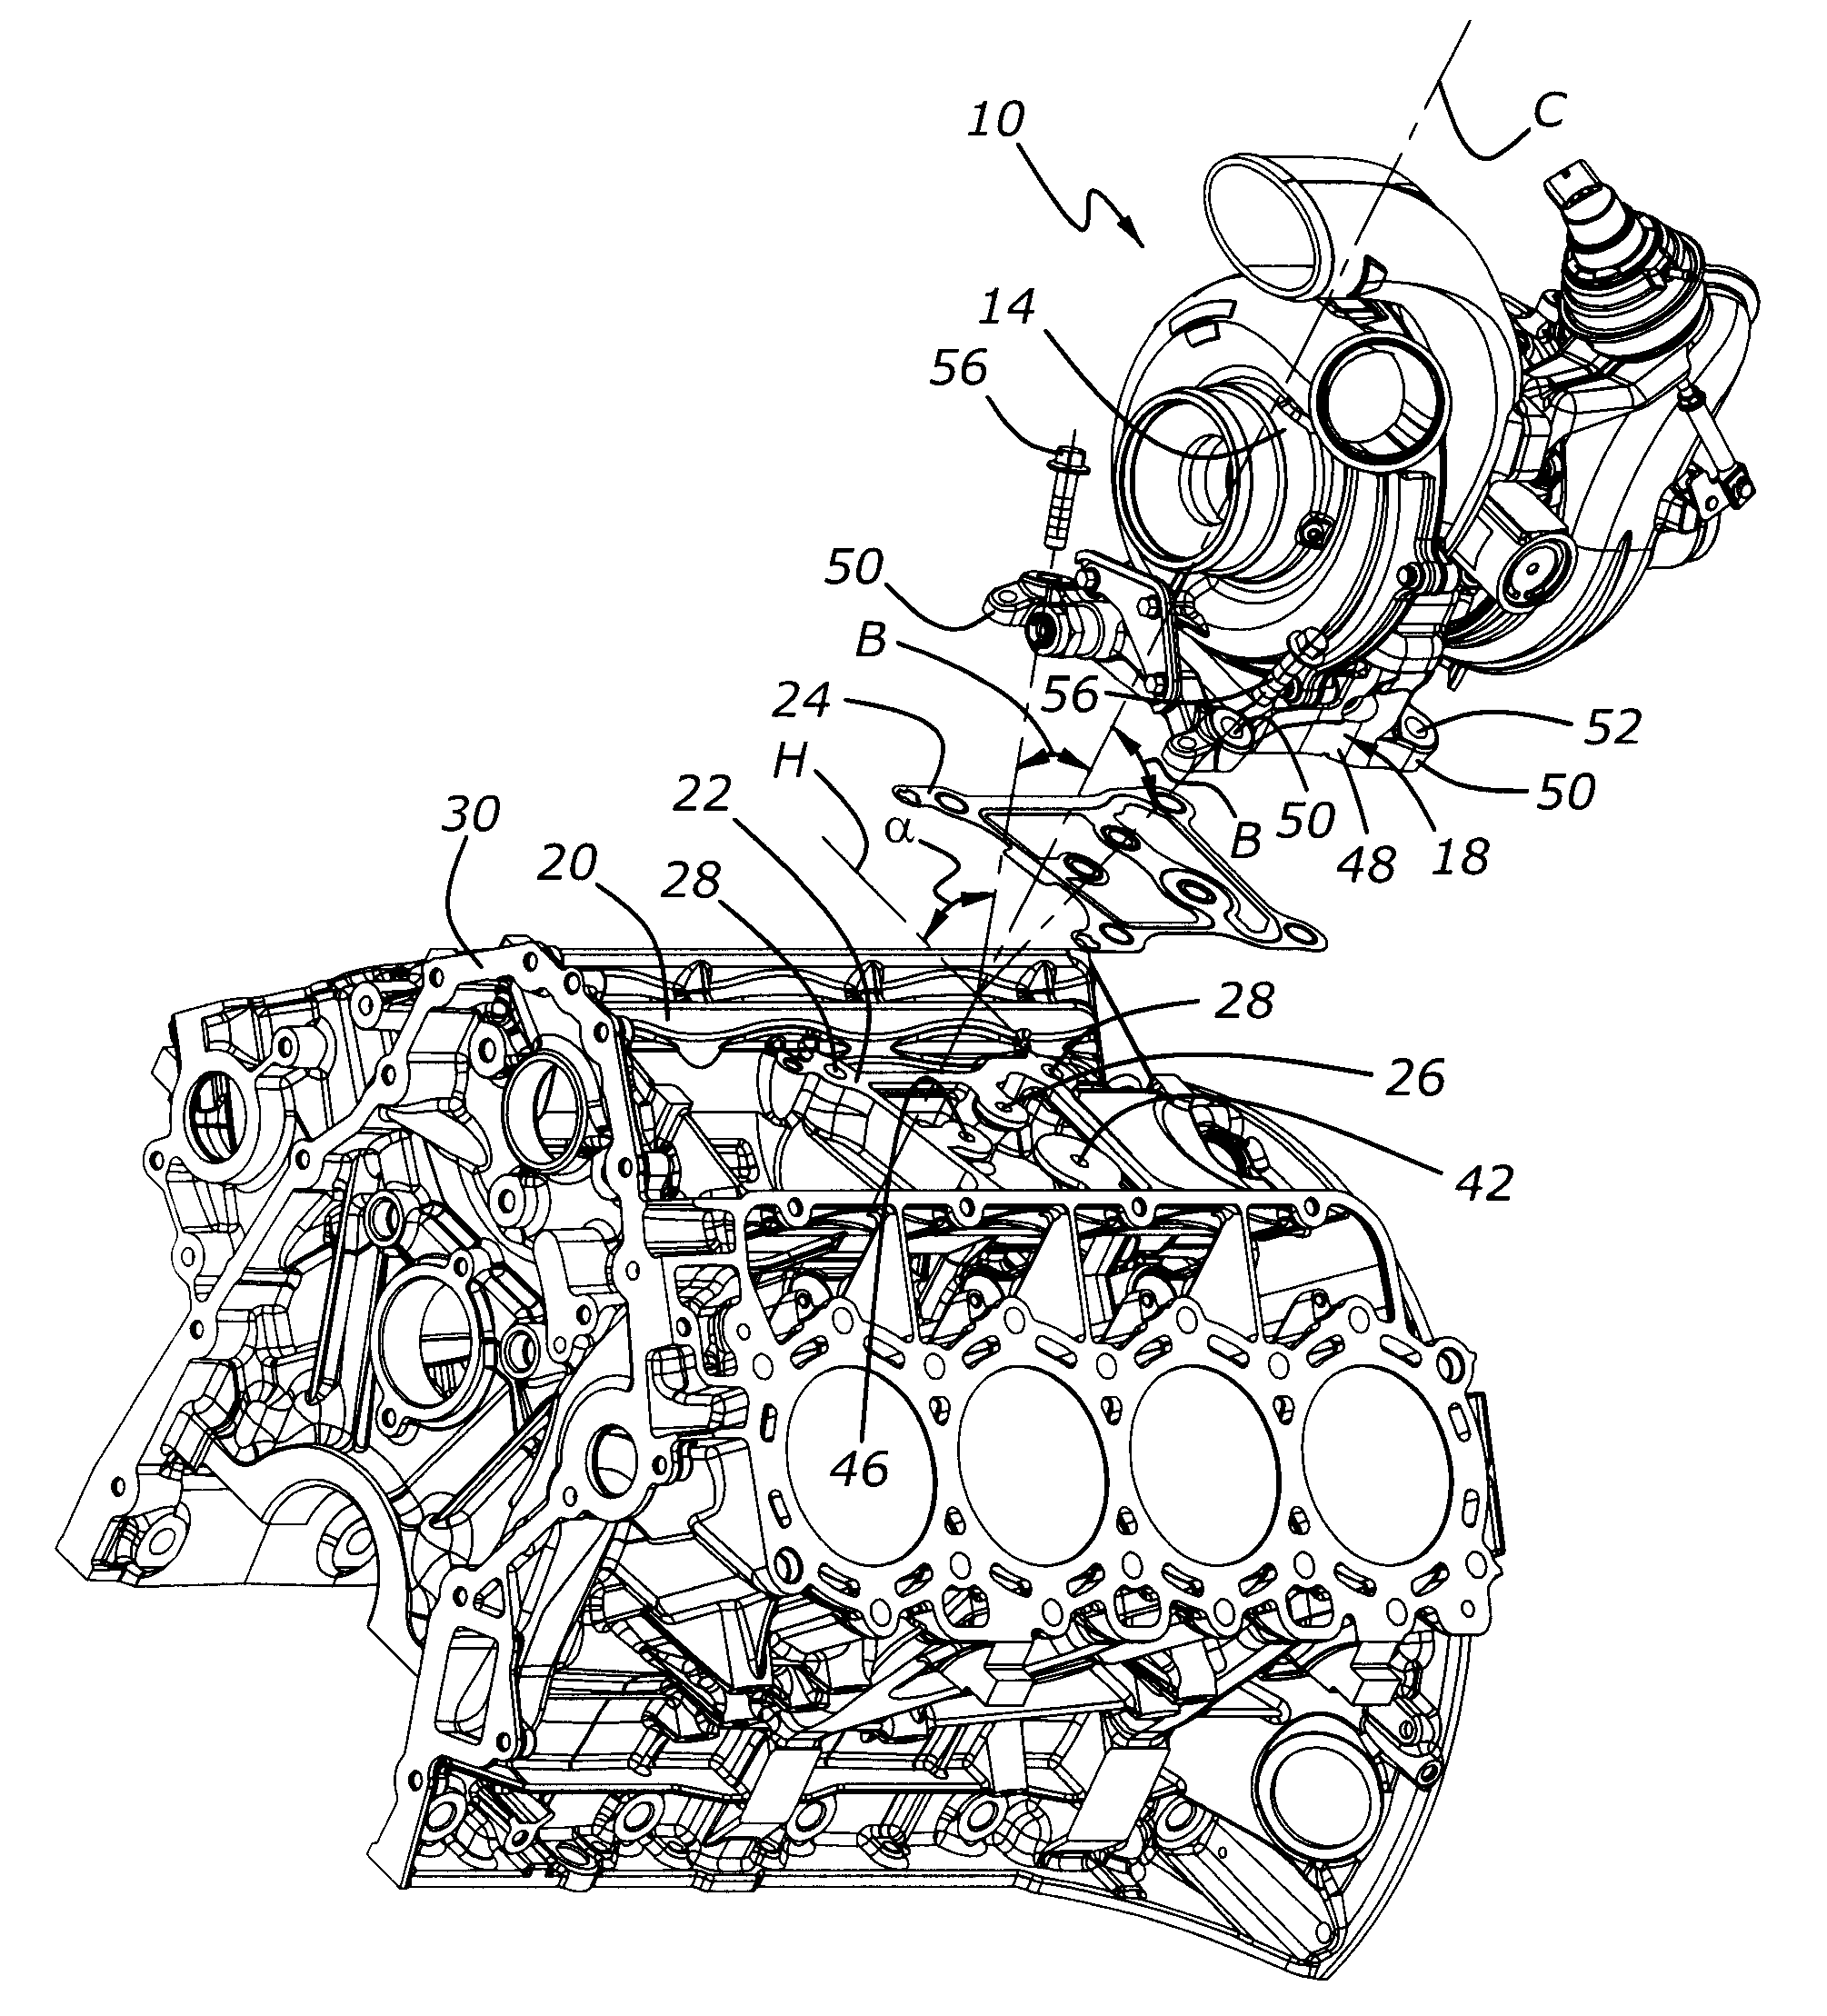 Pedestal mounted turbocharger system for internal combustion engine